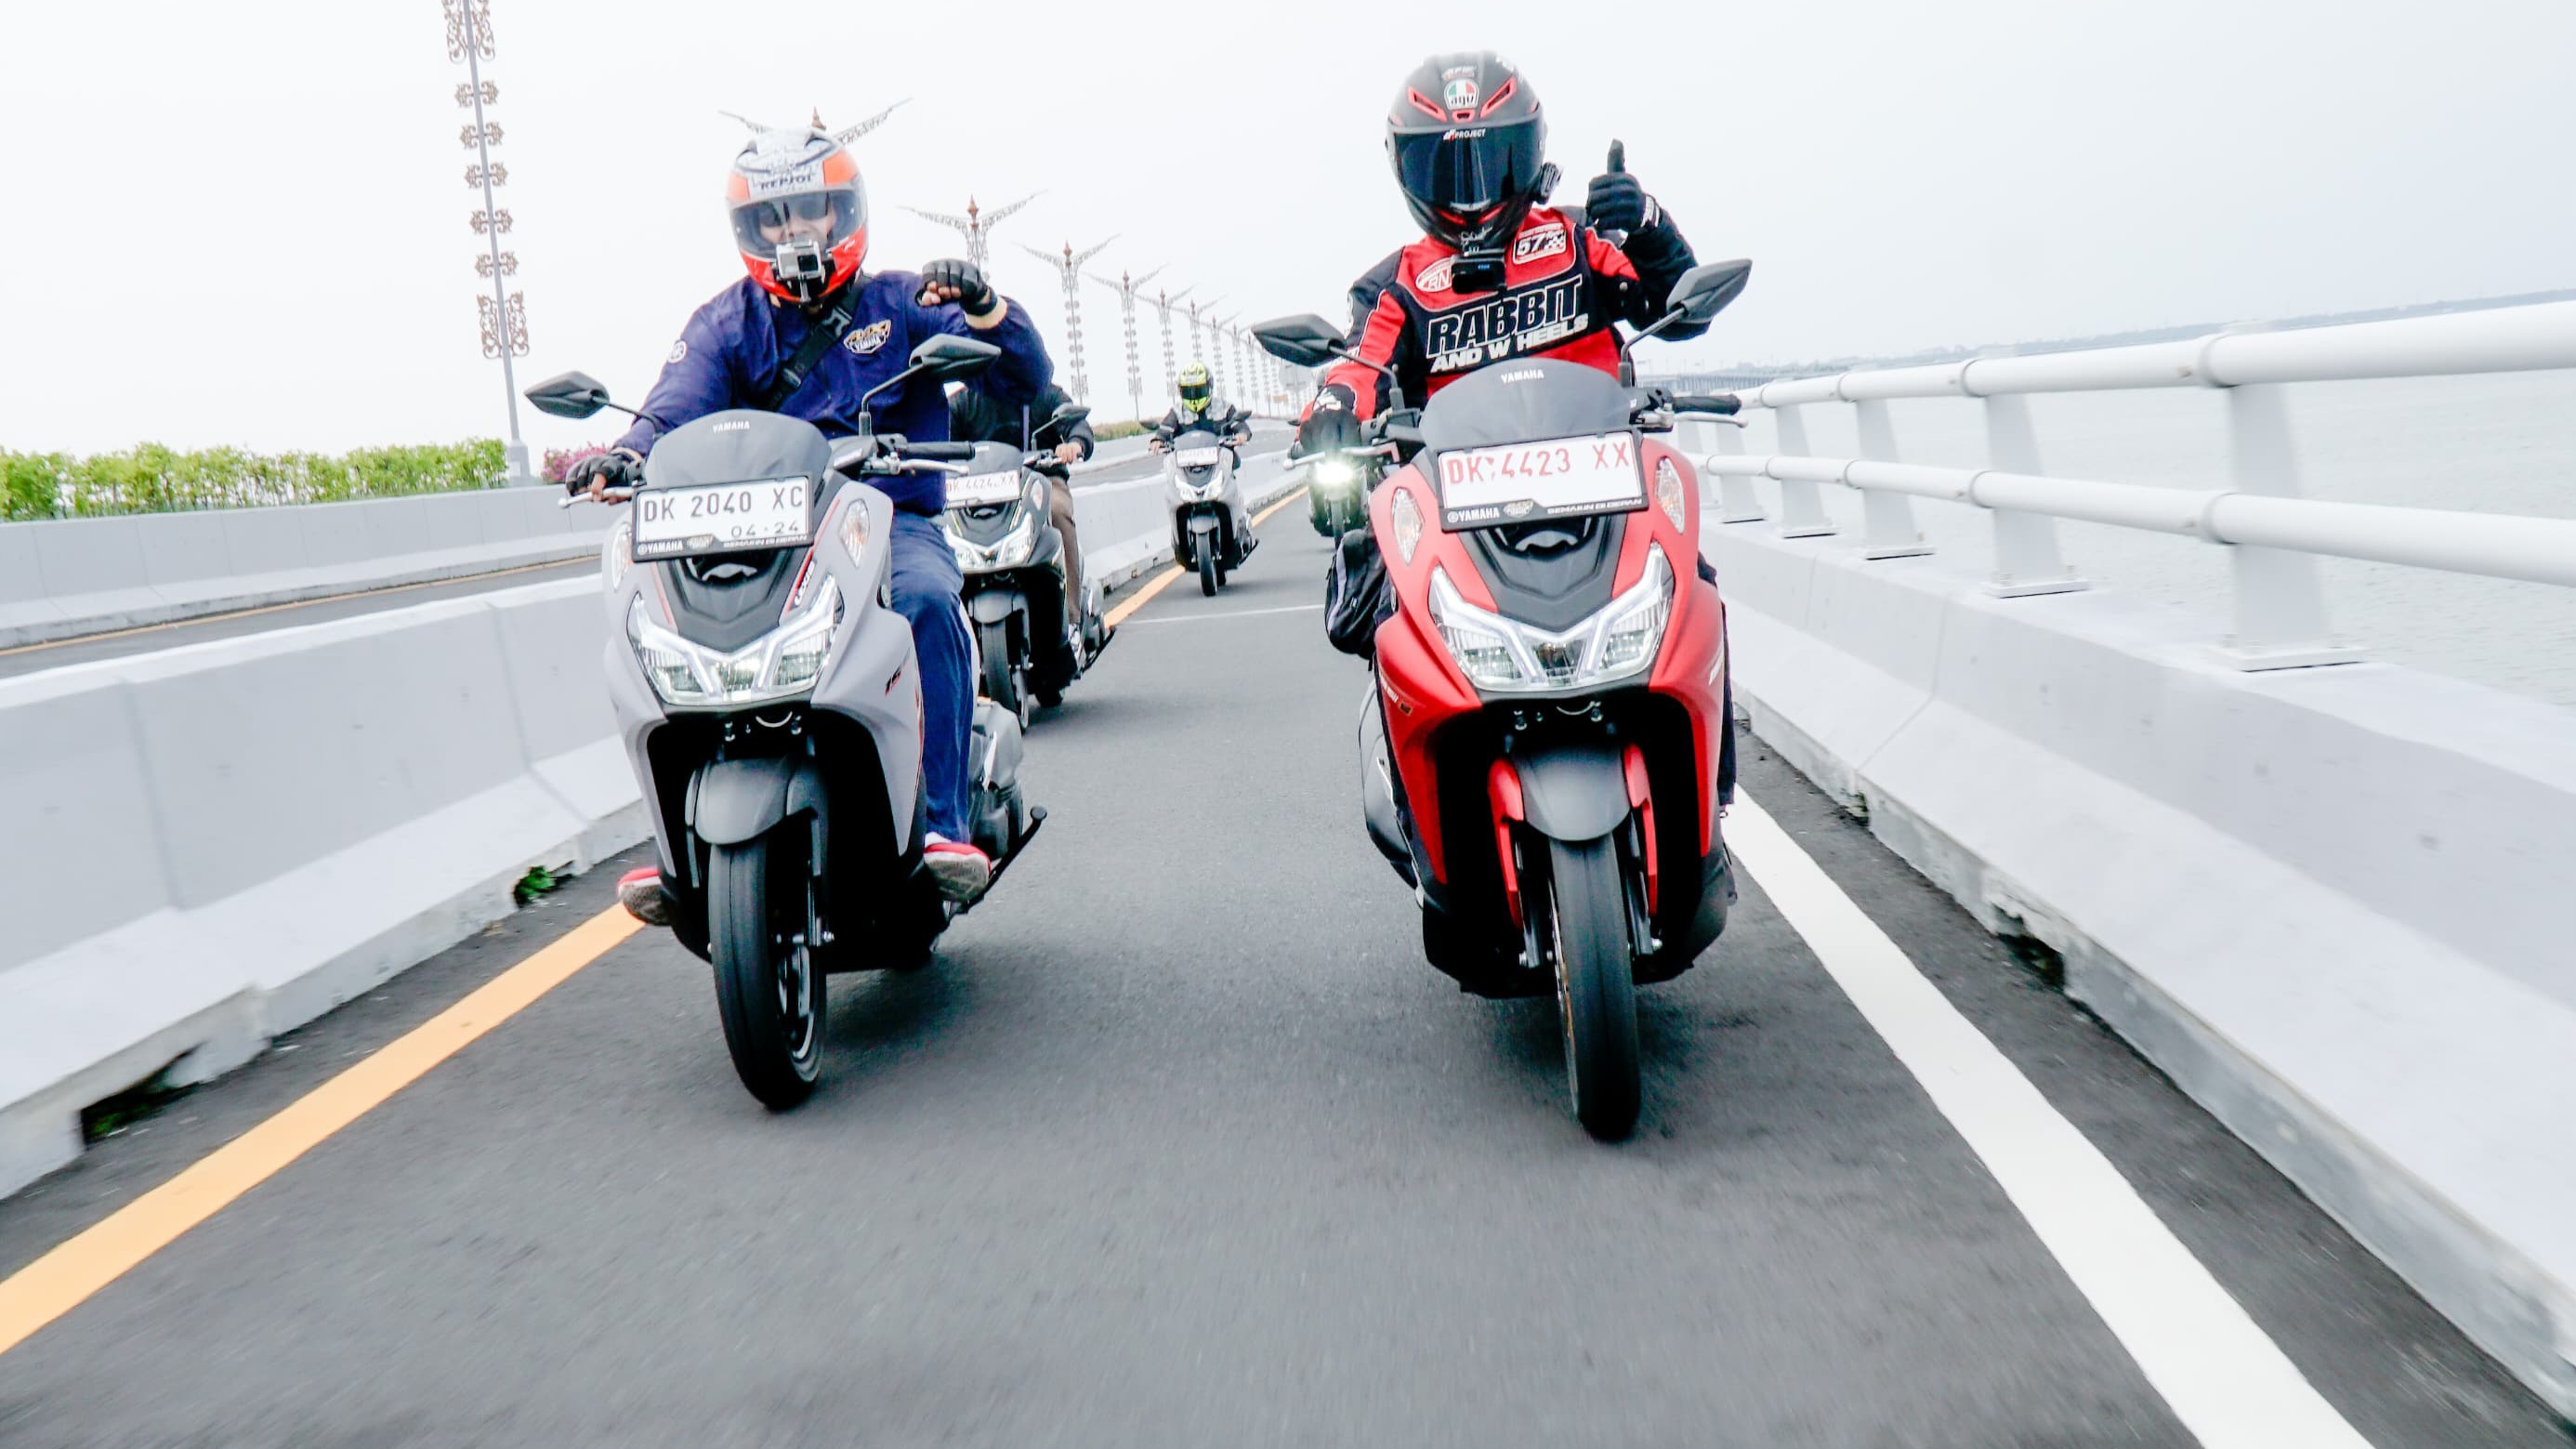 Maxi Flash Trip Yamaha LEXi LX 155 Mampir ke Bali, Yuk Intip Keseruannya